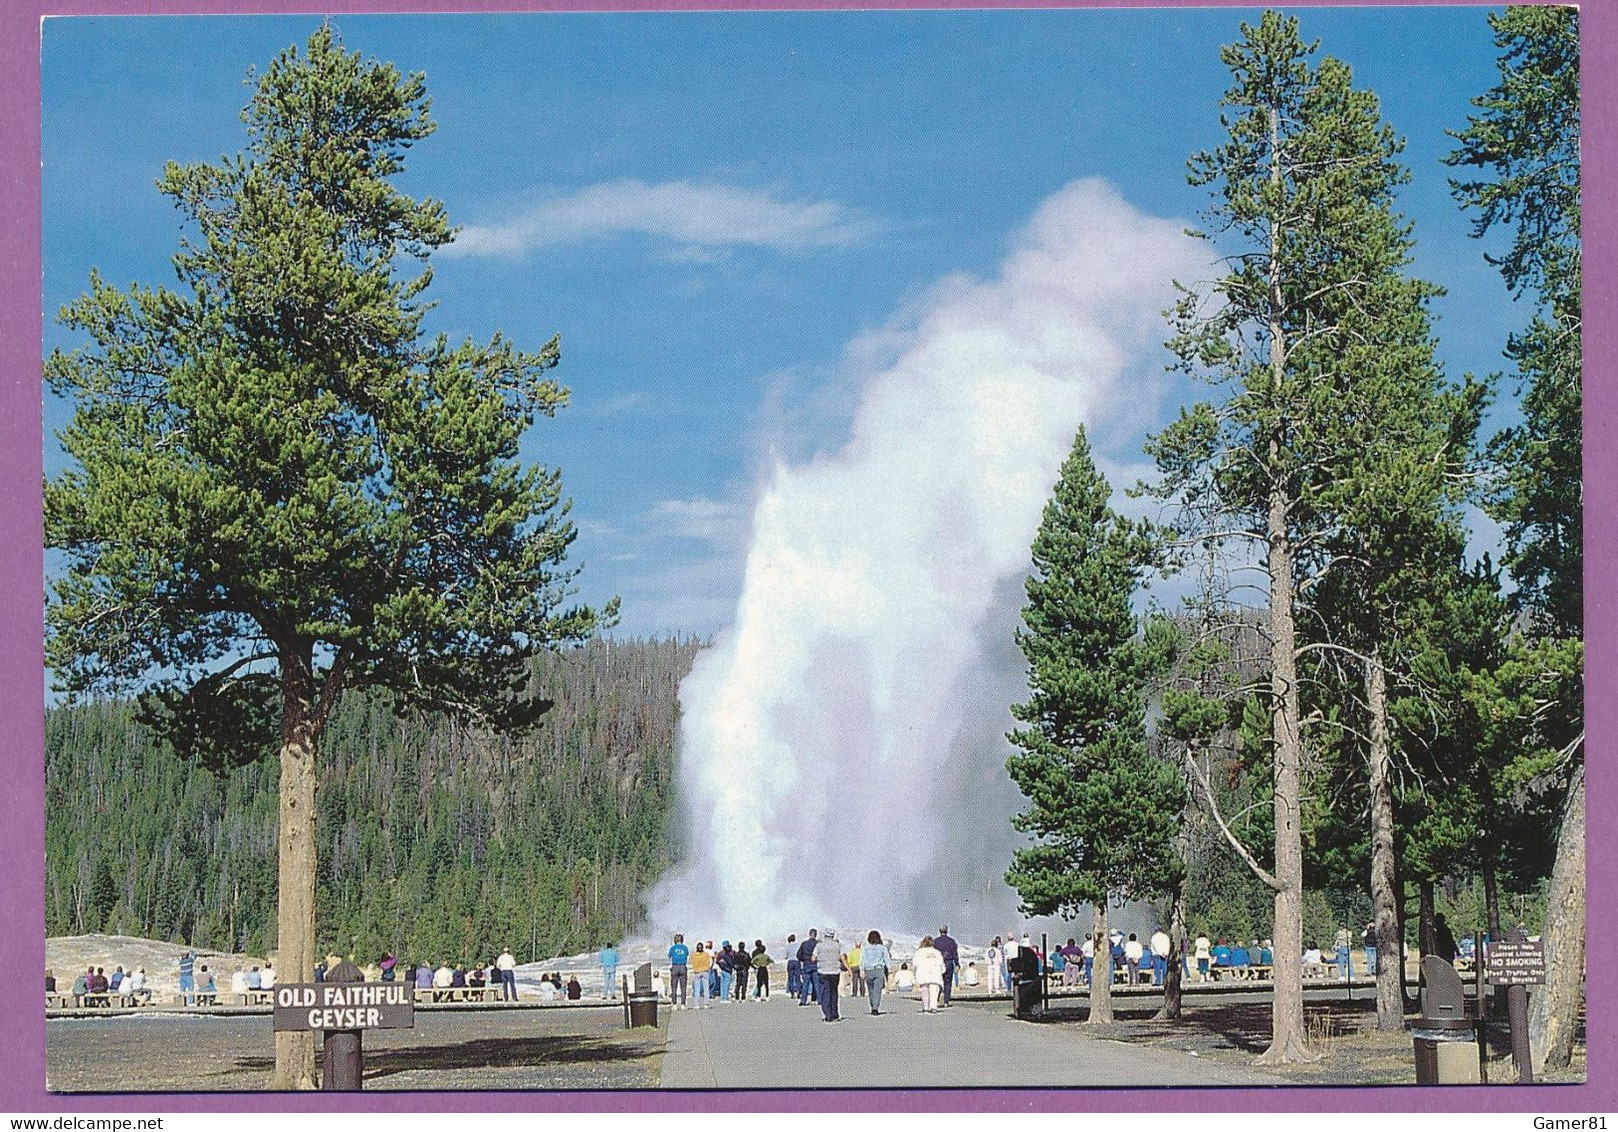 OLD FAITHFUL GEYSER - Yellowstone National Park - Yellowstone